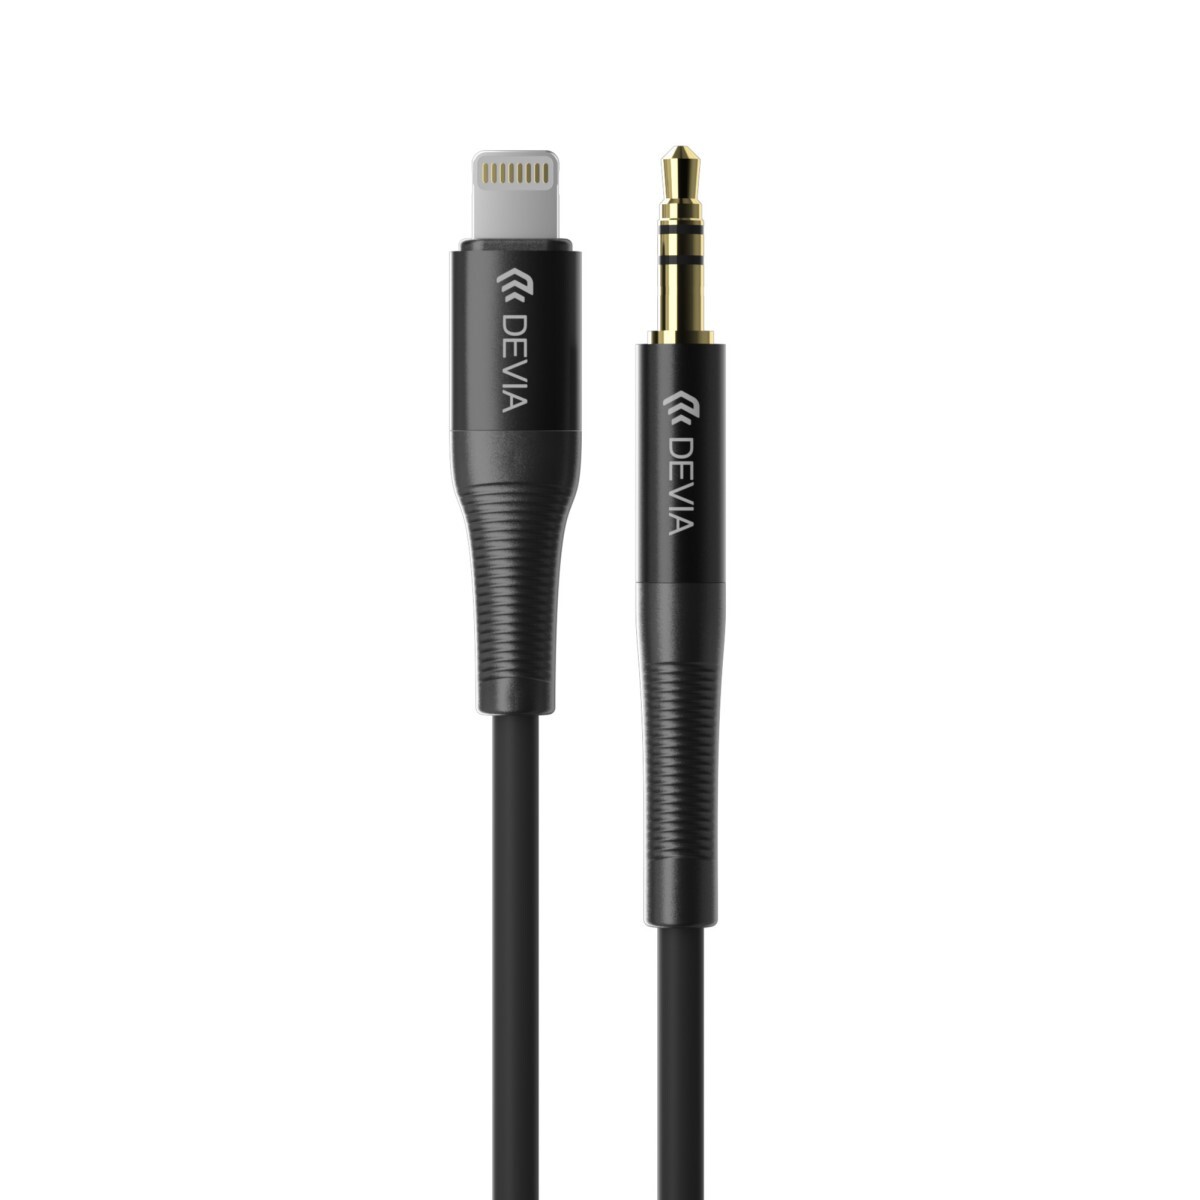 Cable de audio usb lightning a 3.5mm devia ipure series - Black 